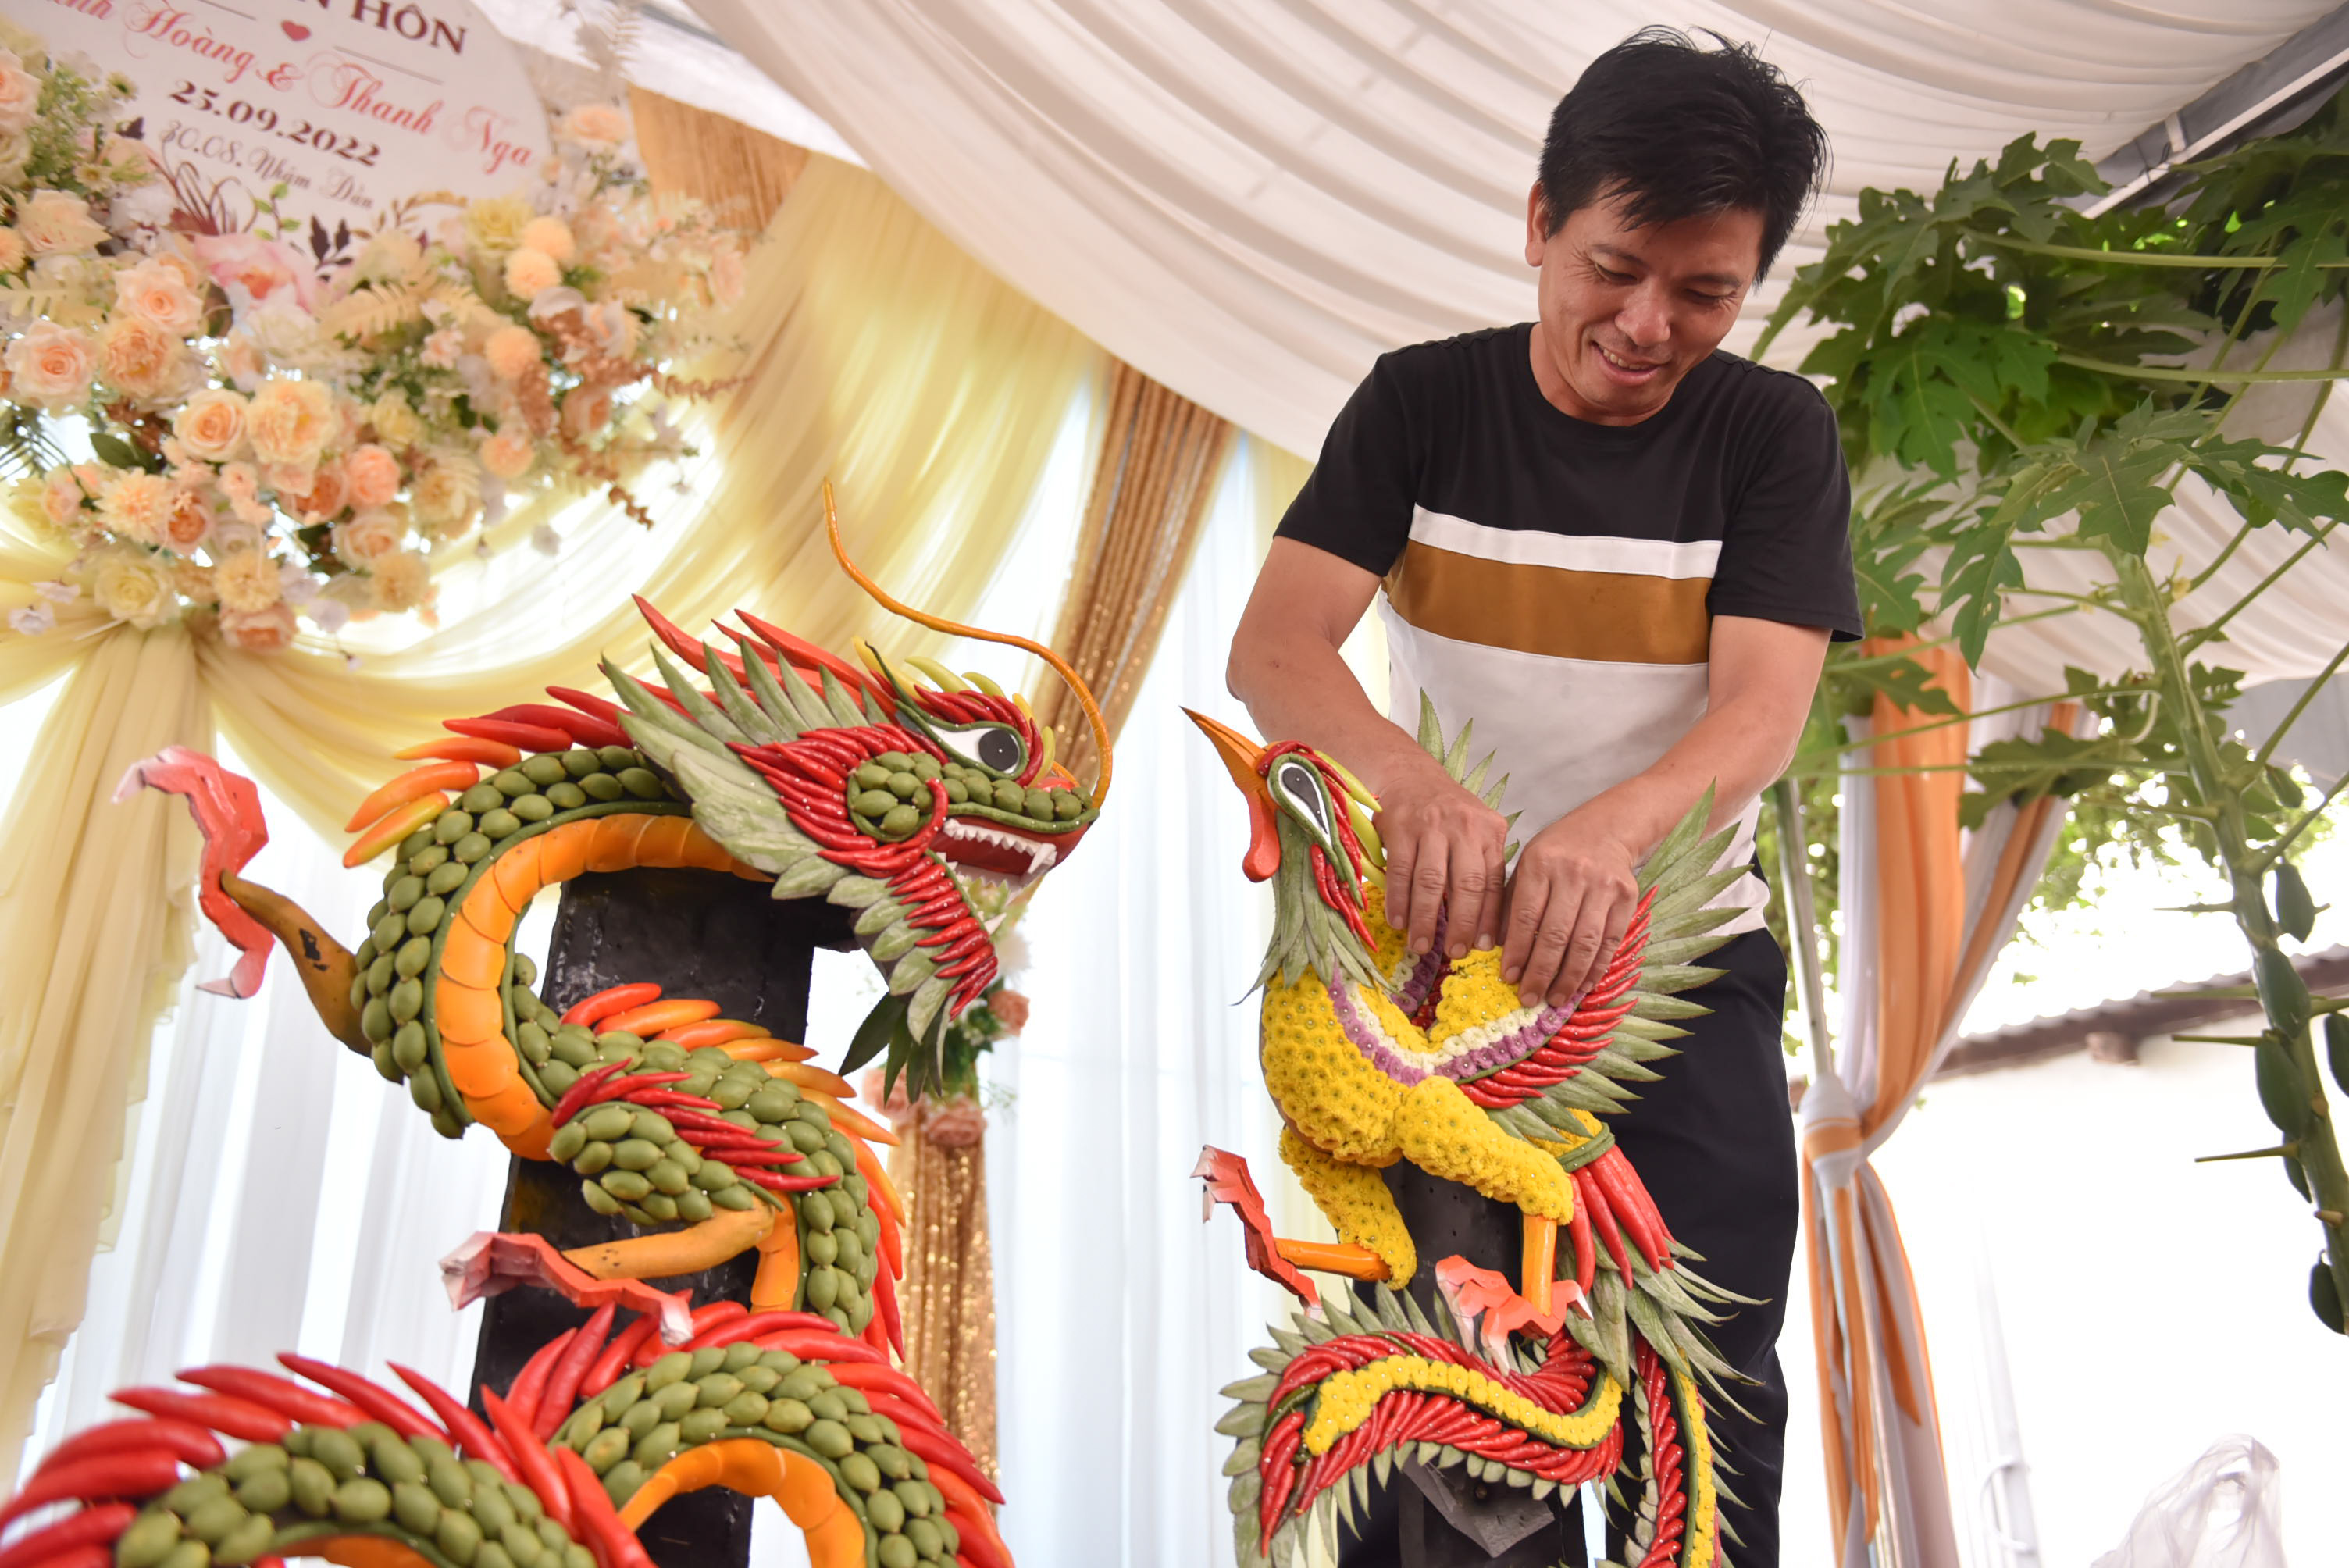 Meet the Vietnamese man who creates massive wedding gates out of veggies